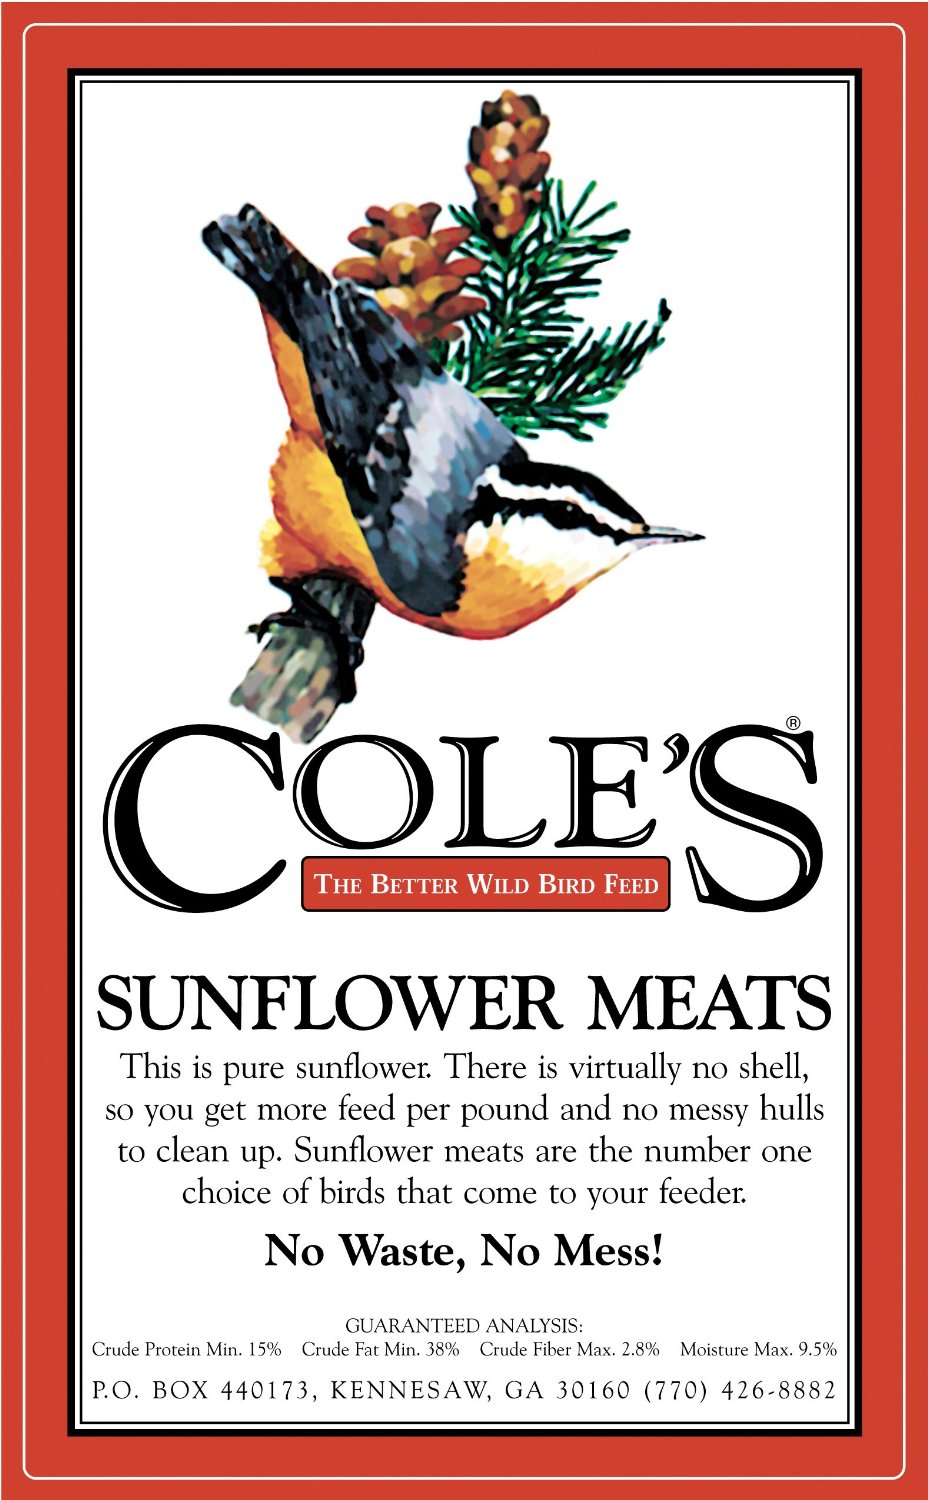 Cole's SM20 Sunflower Meats Wild Bird Food, 20 Lb